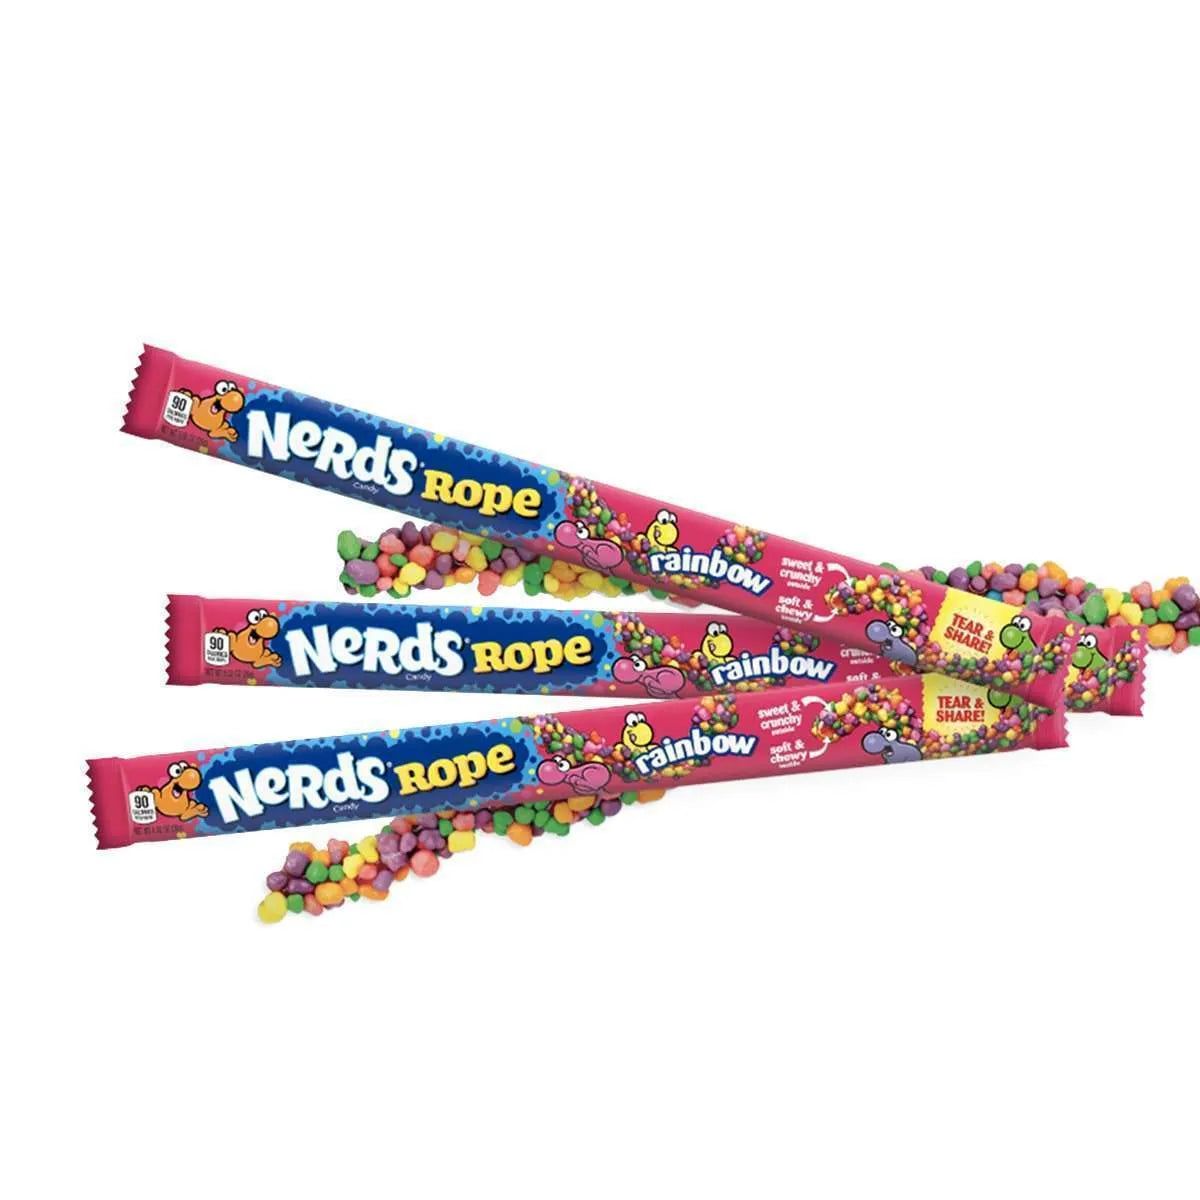 Nerds Rope Rainbow - Caramella gommosa alla frutta ricoperta di caramelline fruttate (26g) bundle candy online